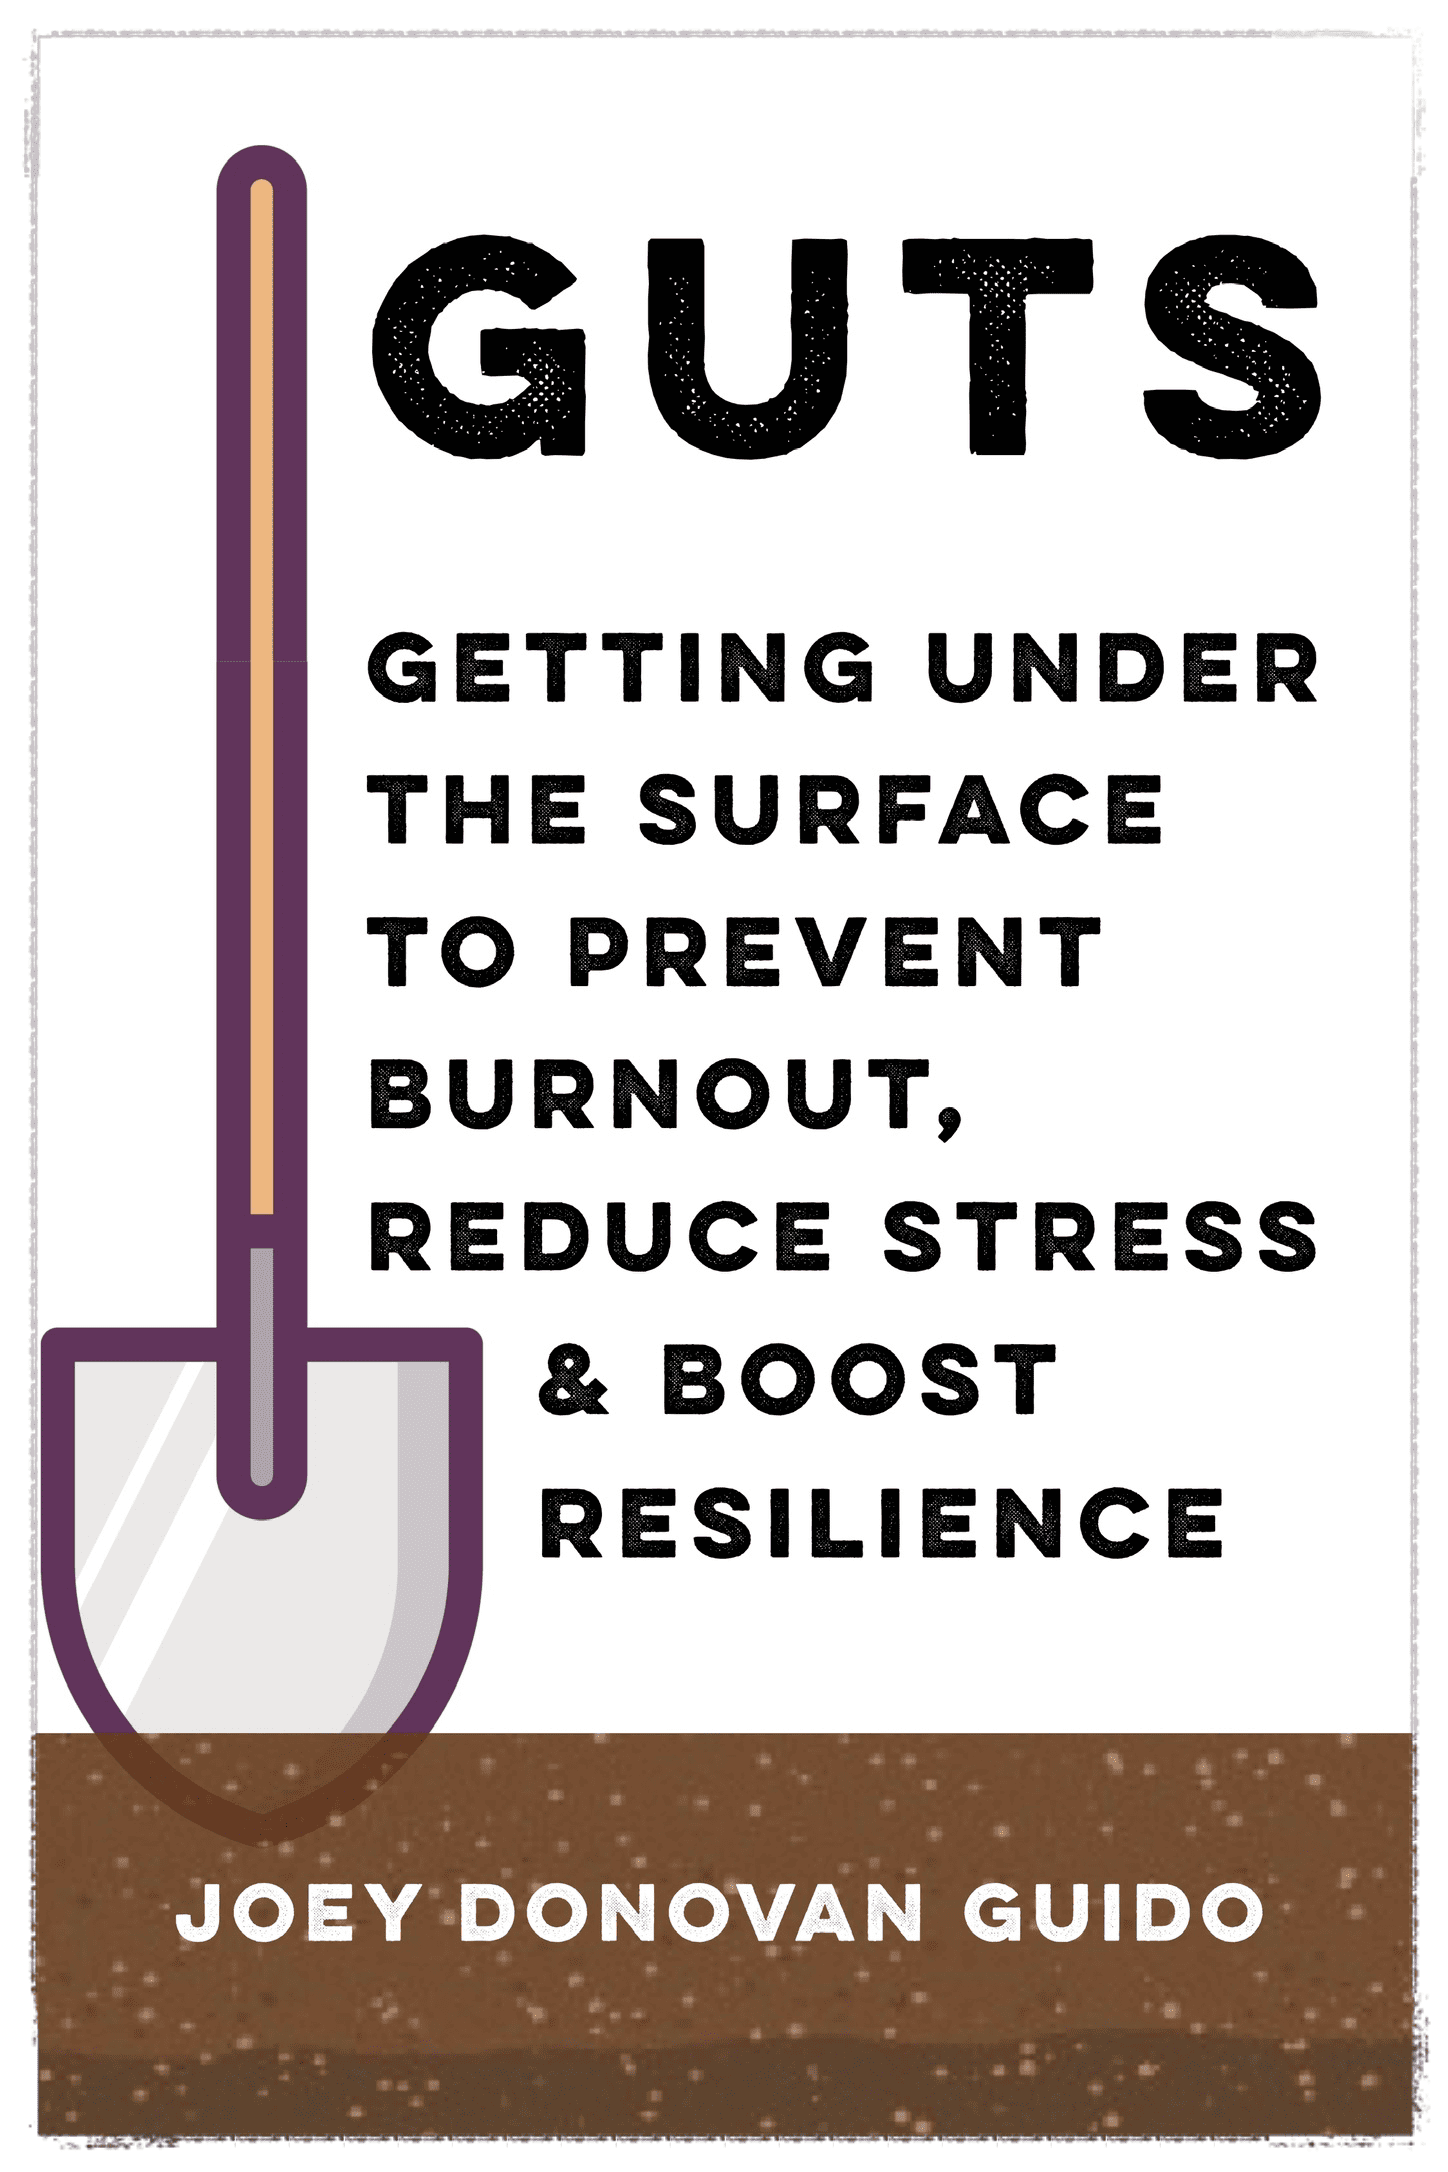 Mindfulness Keynote Speaker Resilience Book